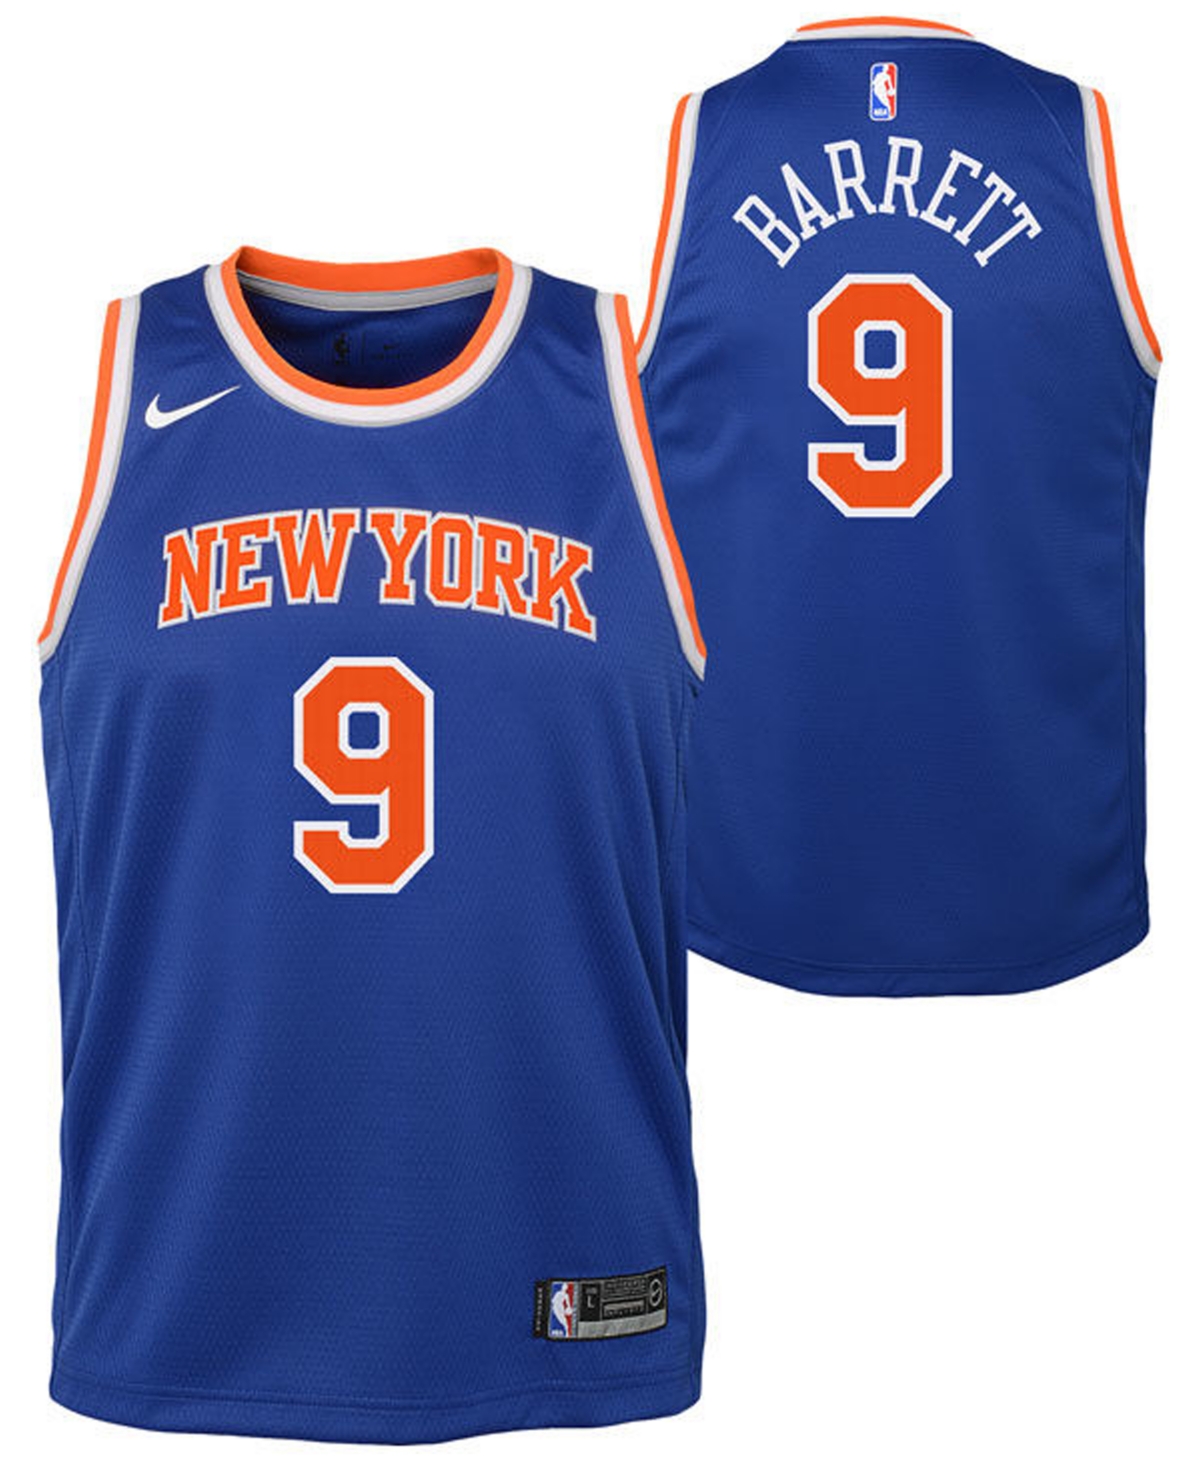 Nike Big Boys Rj Barrett New York Knicks Icon Swingman Jersey